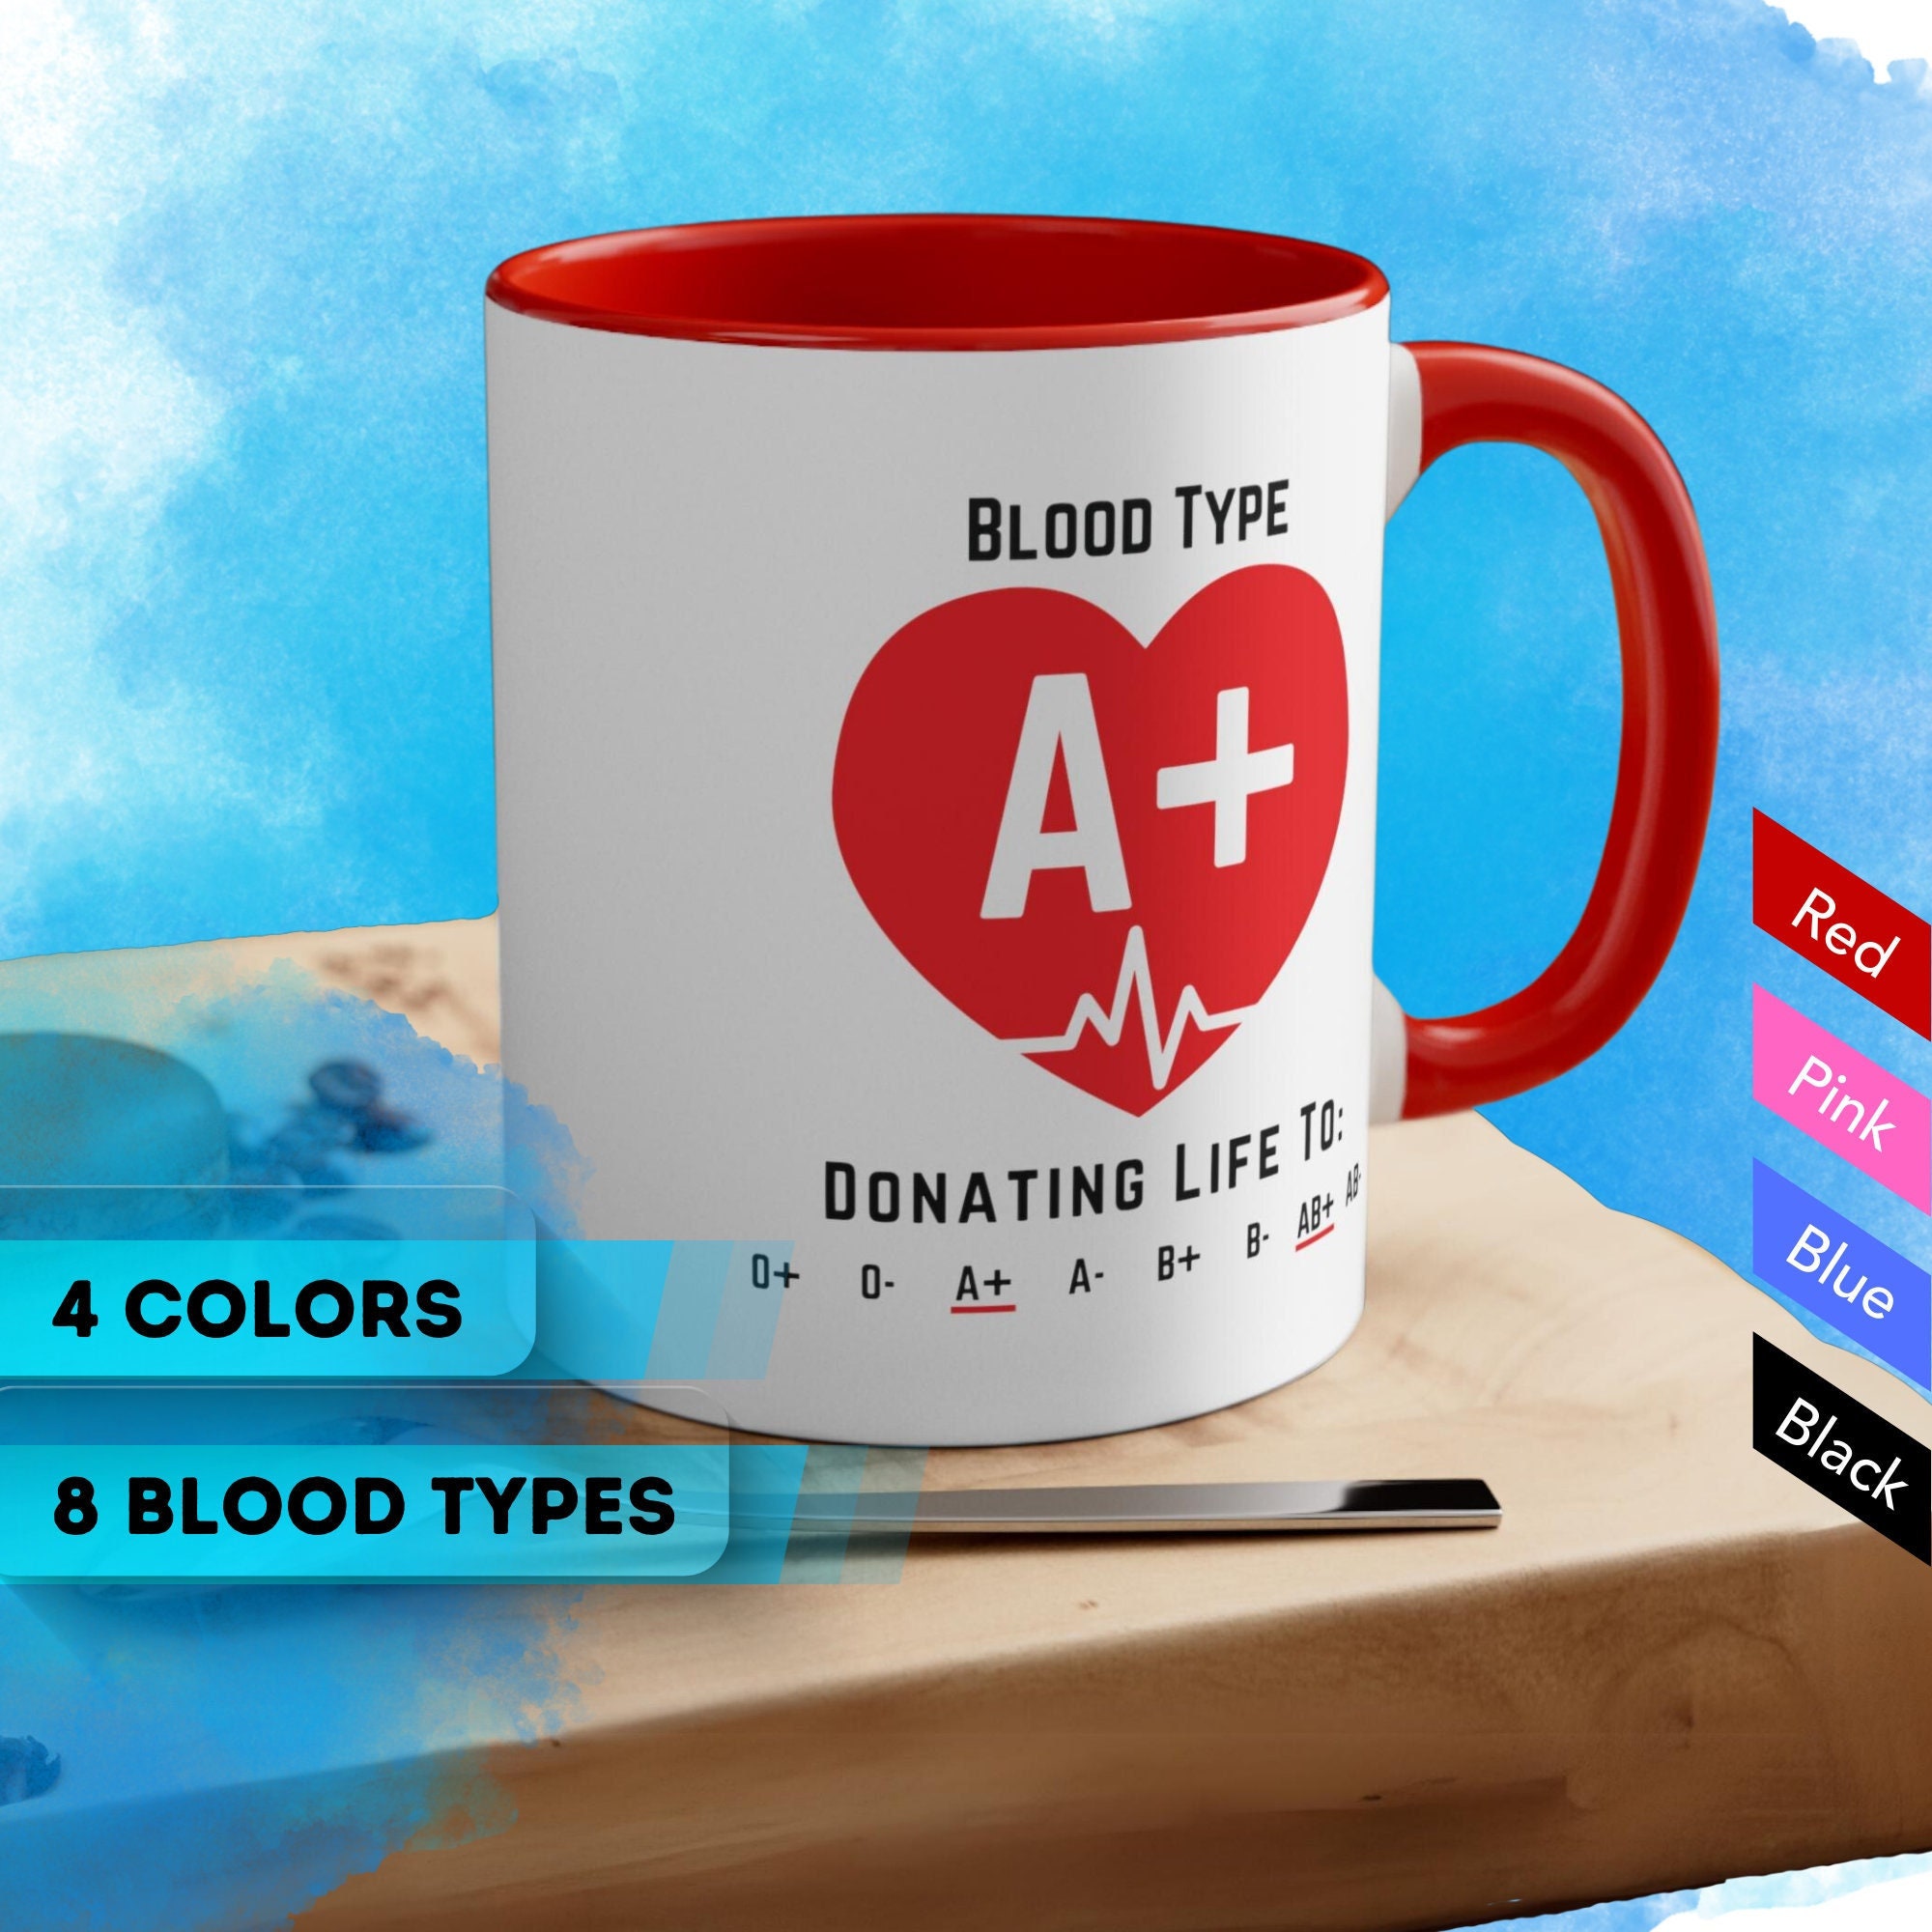 Blood Donor Mug. Blood Donor Gift. Donate Blood Mug. Give 